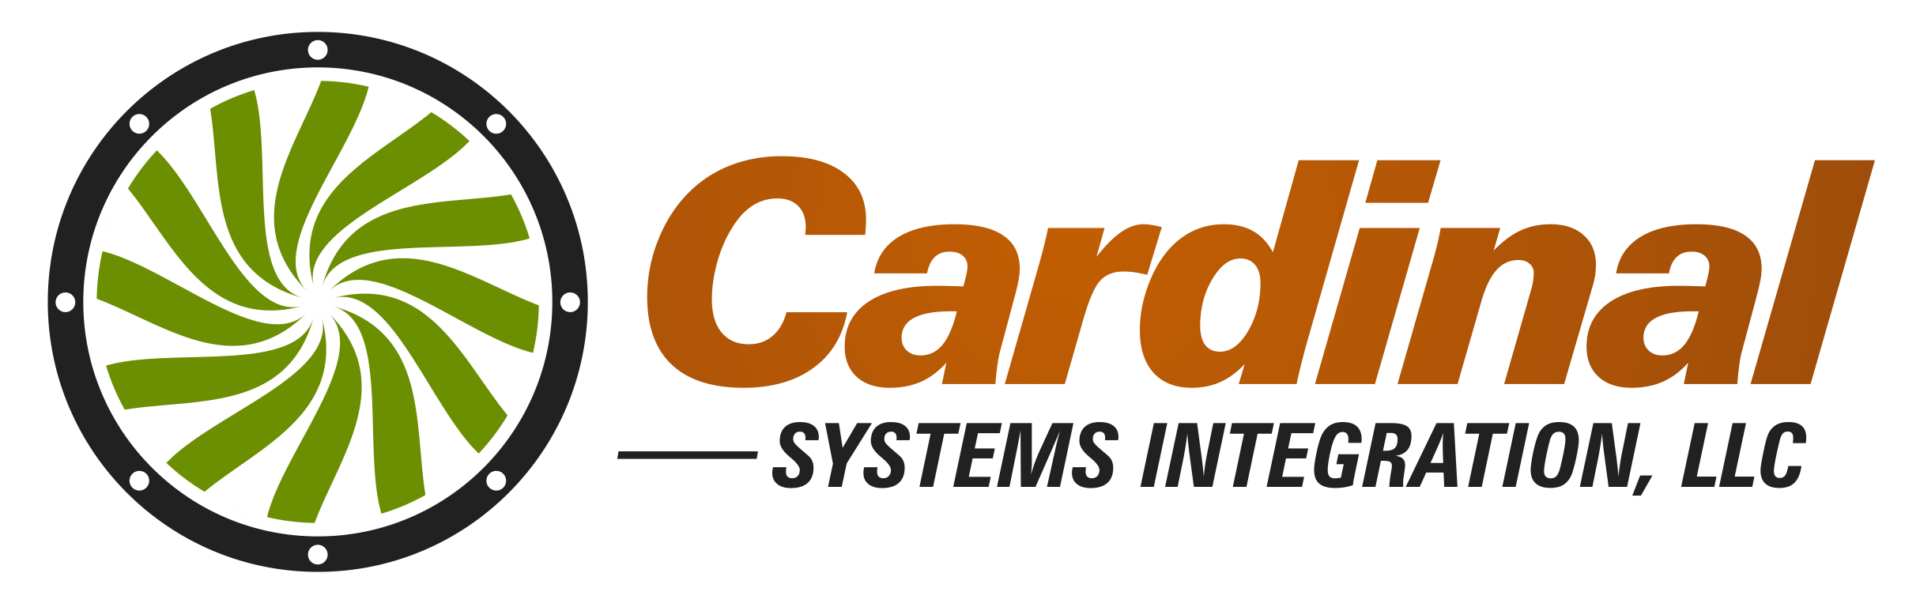 Cardinal Systems Integration